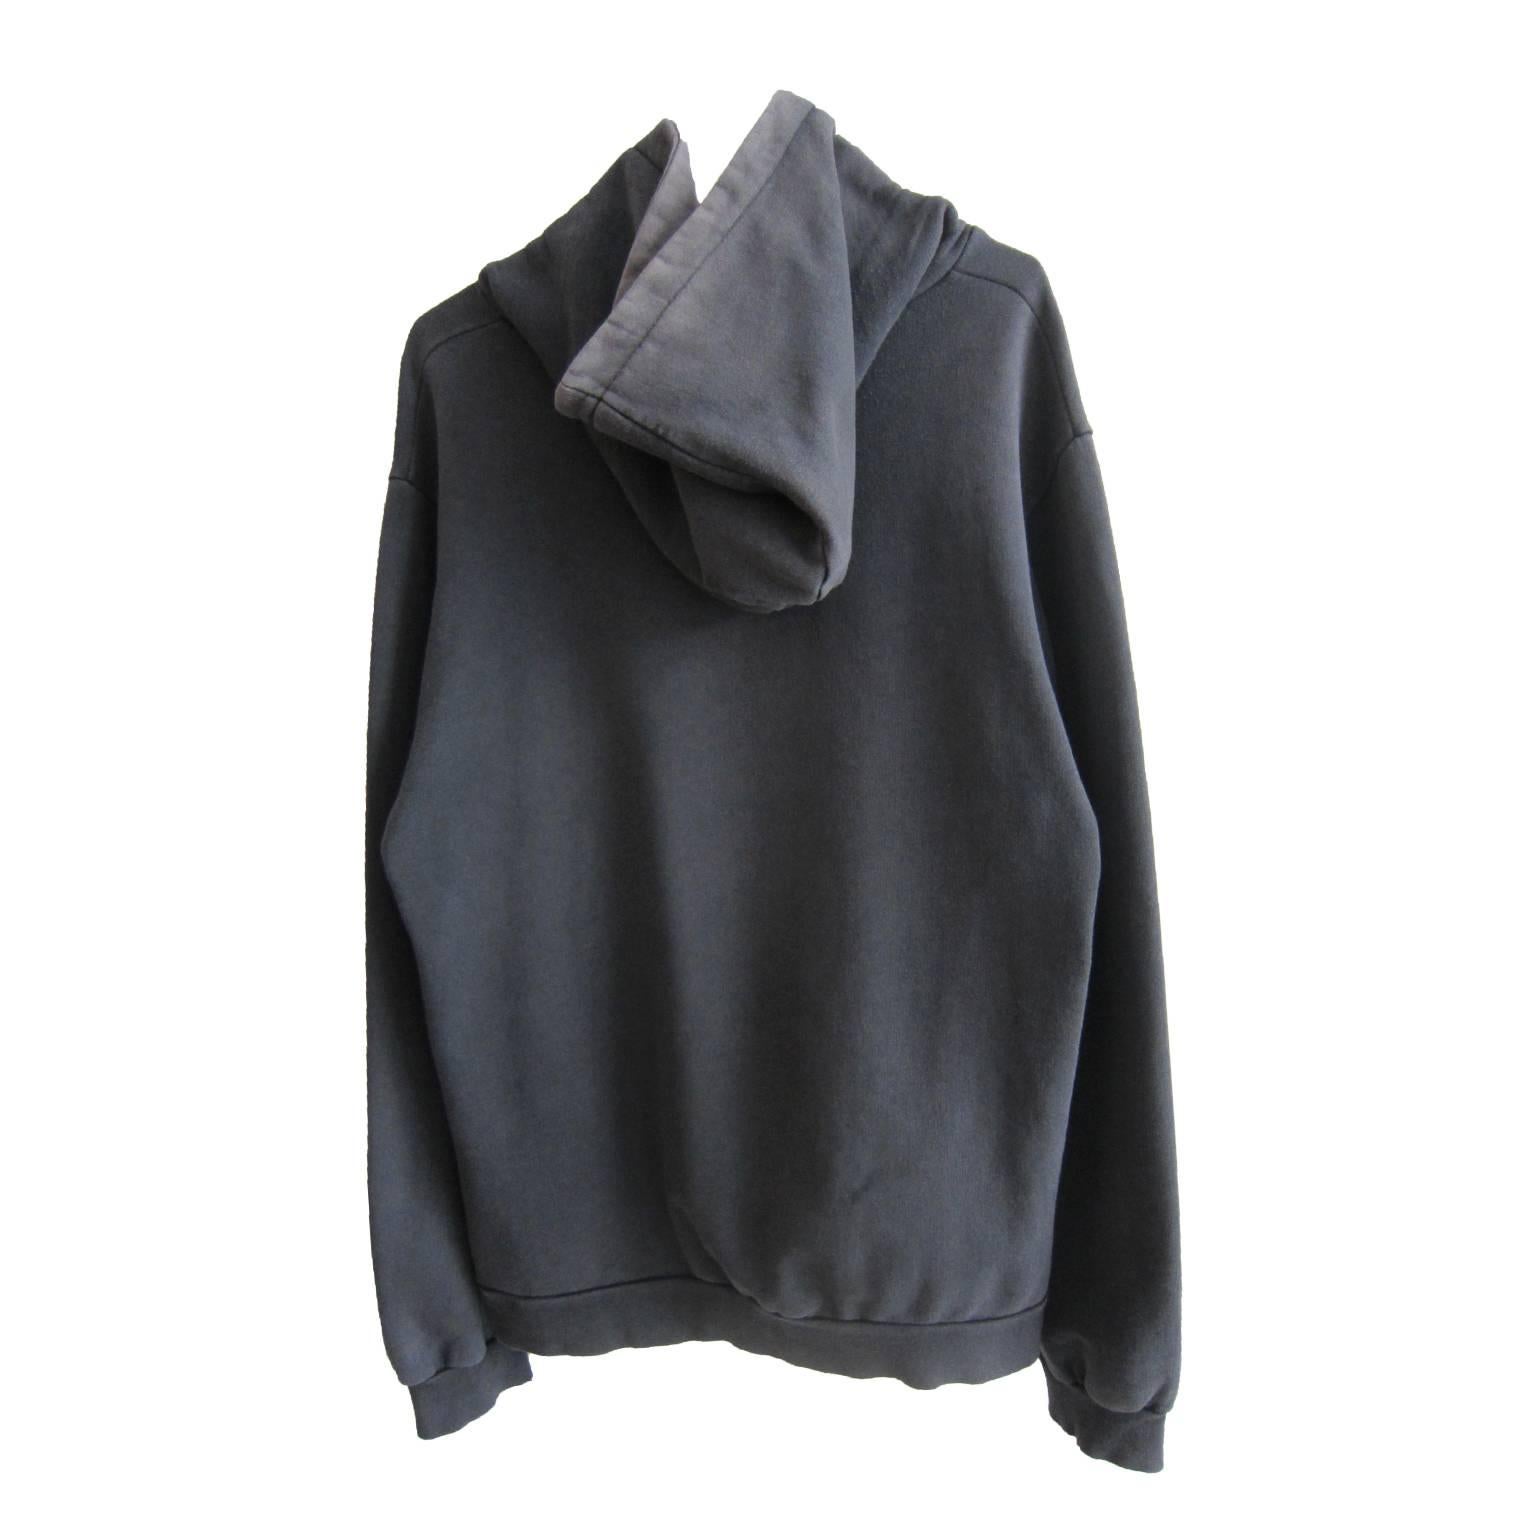 Raf Simons dark grey hoodie sweatshirt from A/W 2002-2003 